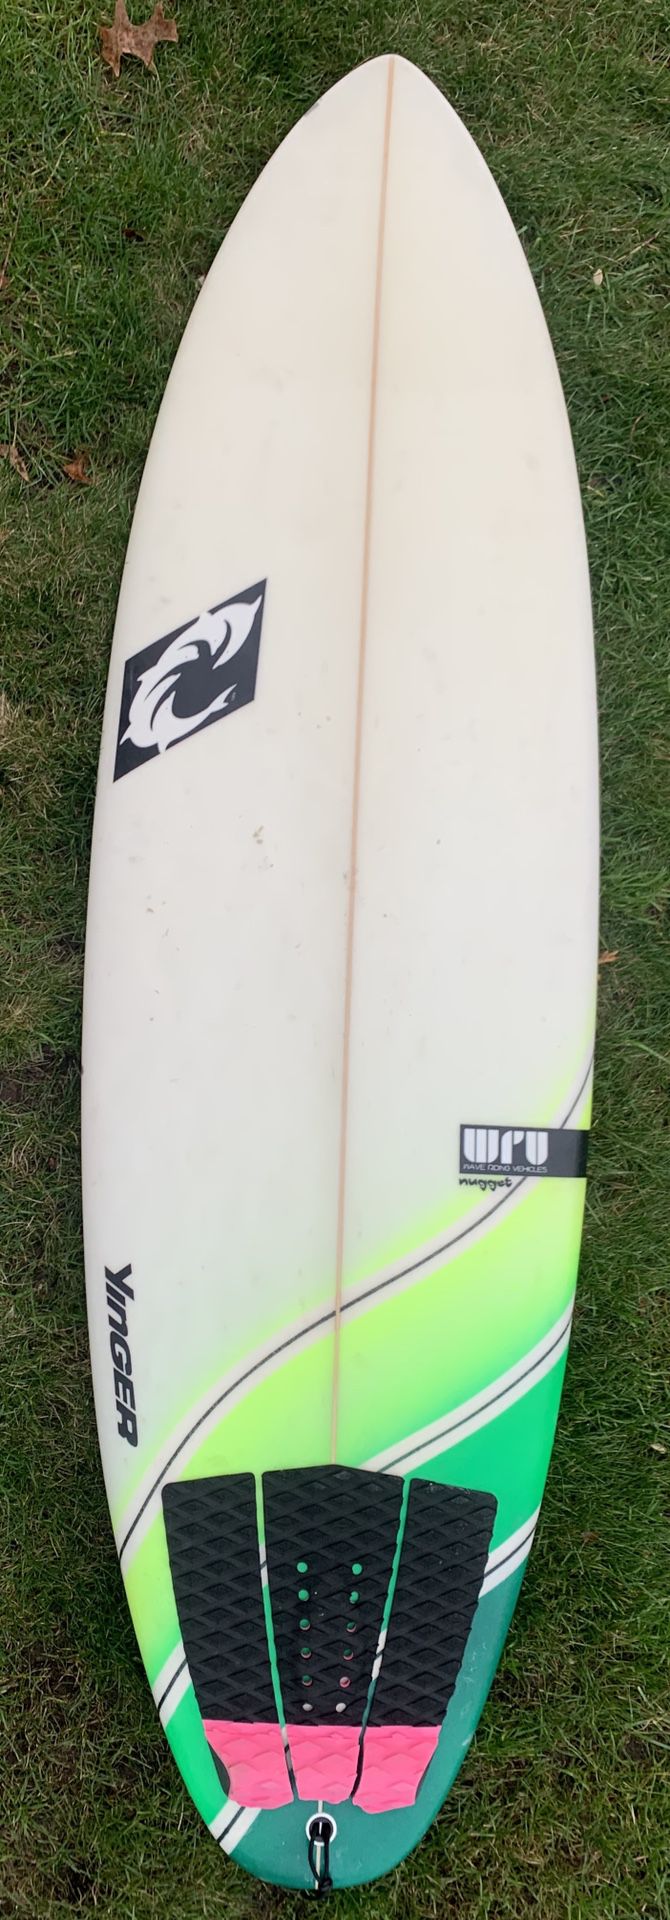 WRV nugget surfboard 5’8”